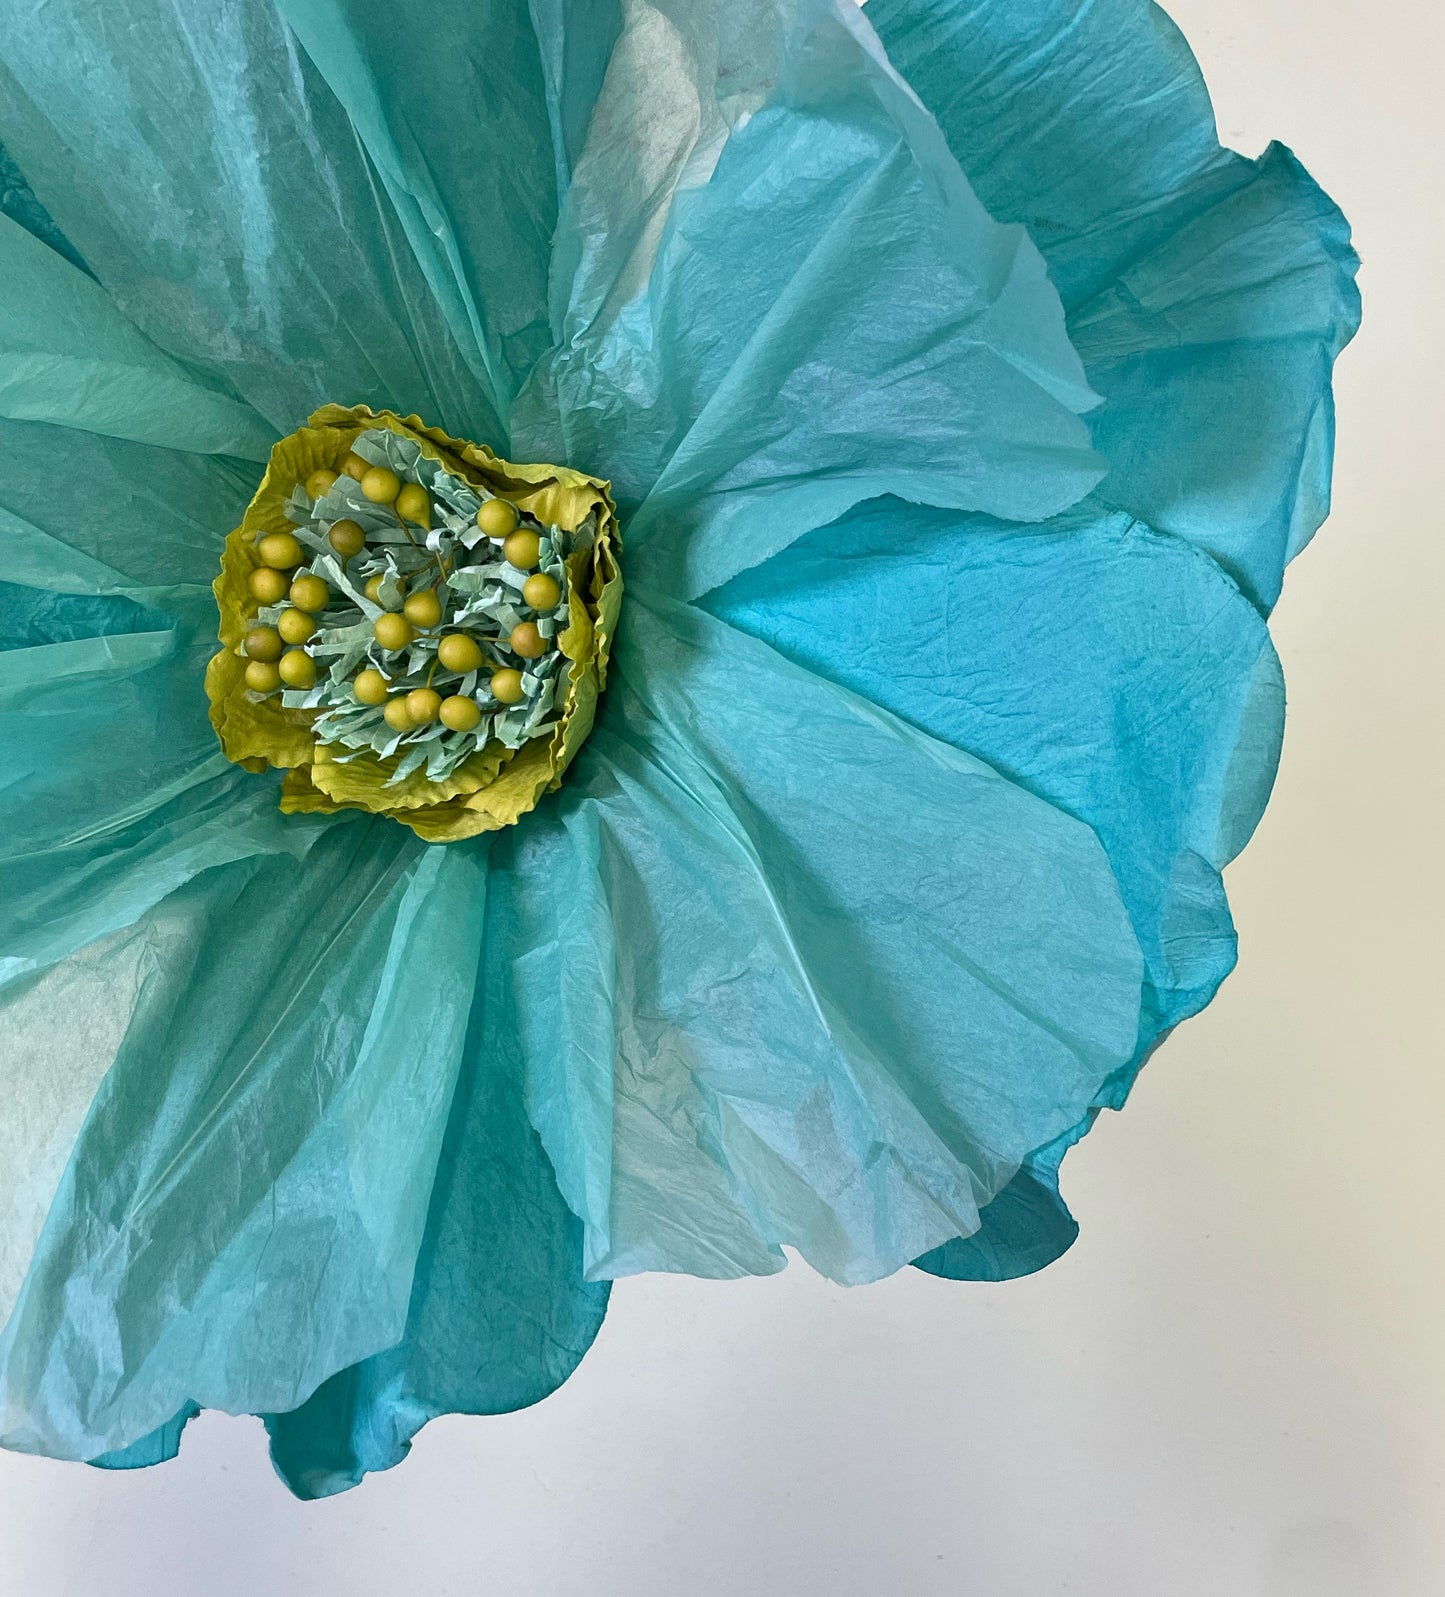 Paper Flower XL in Turquiose